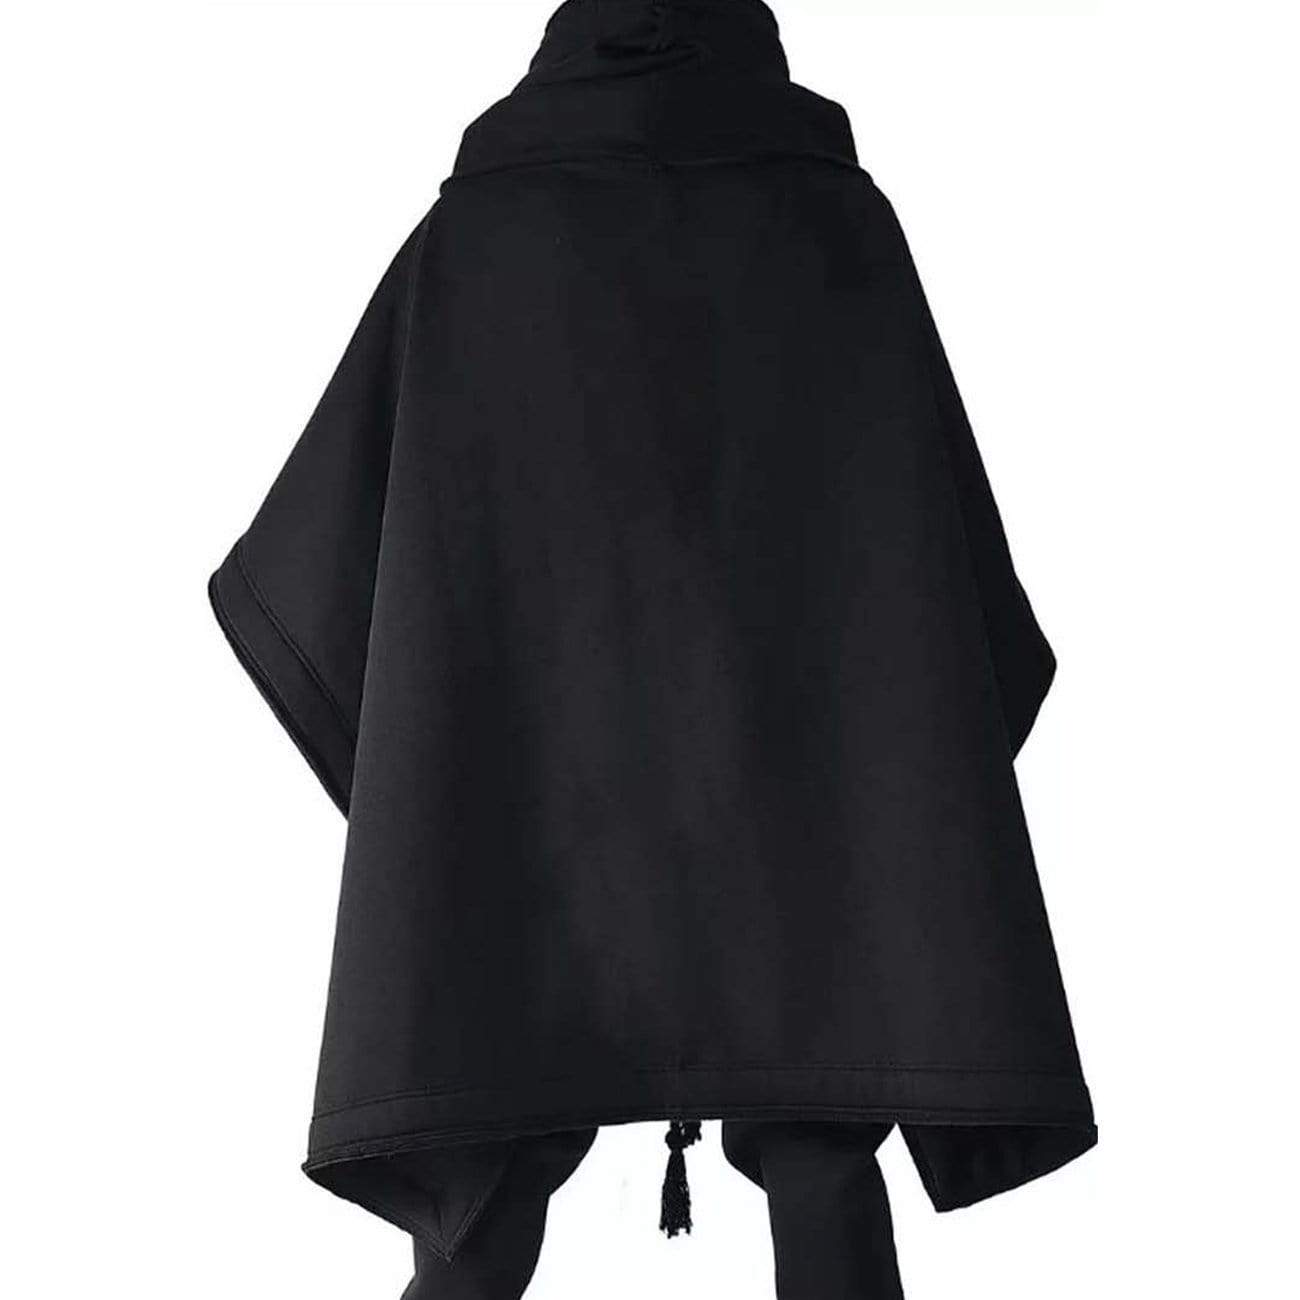 WLS Dark Bat Cloak Cape Wizard Hooded Coat